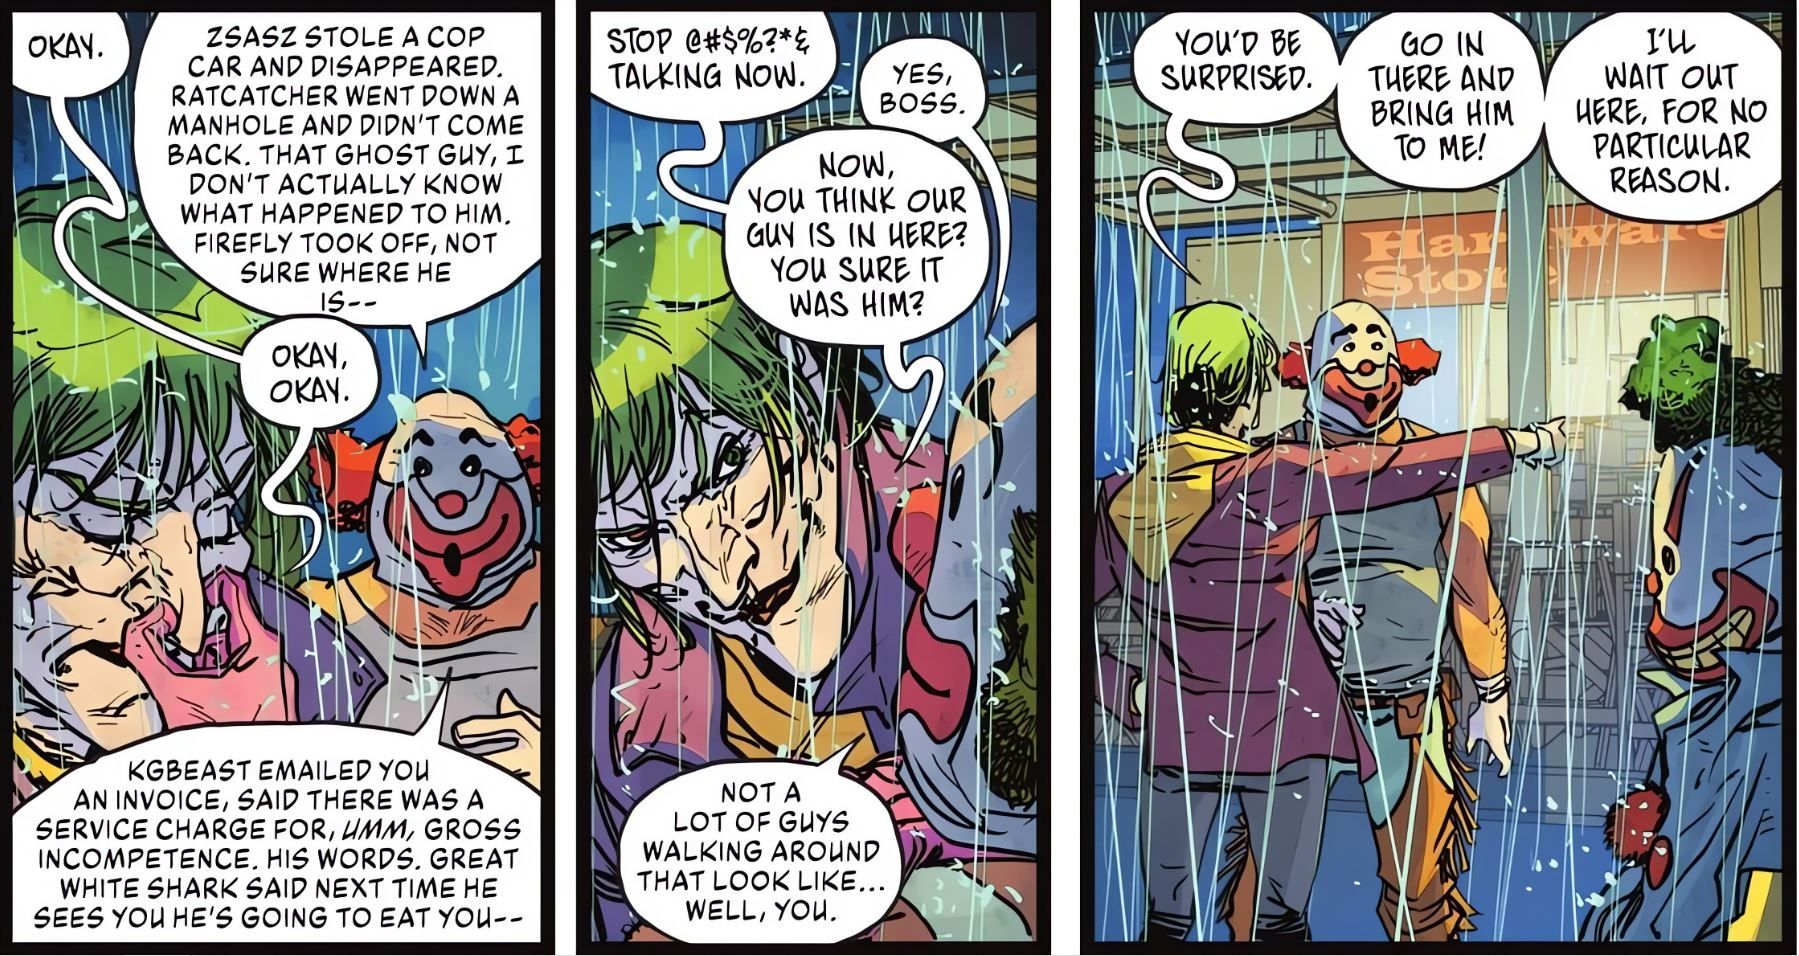 DC Confirms the True Name & Backstory of Gotham’s New Joker